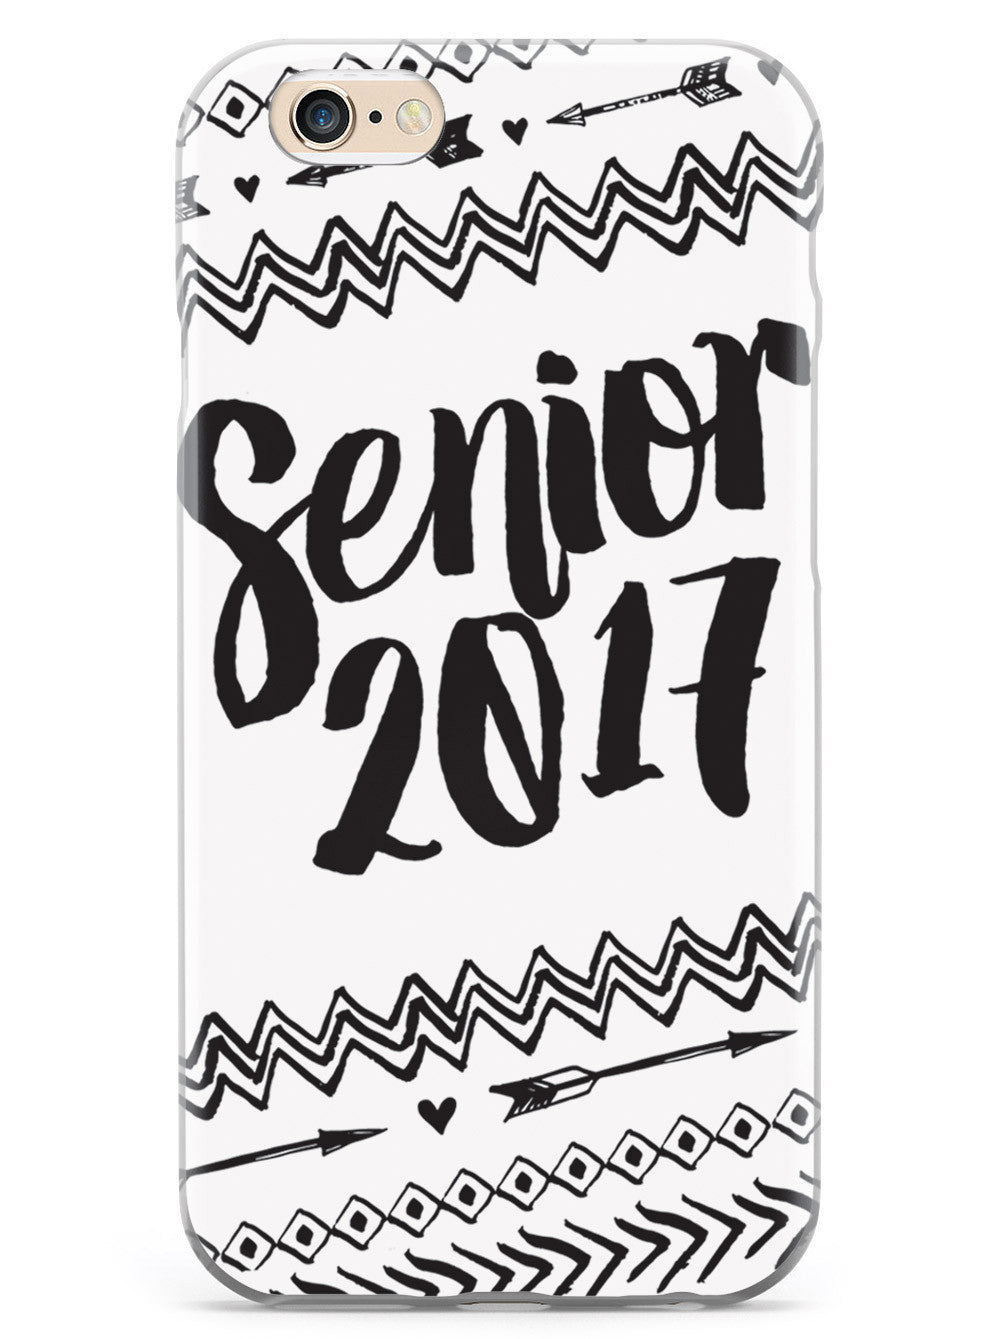 Senior 2017 - Black Case